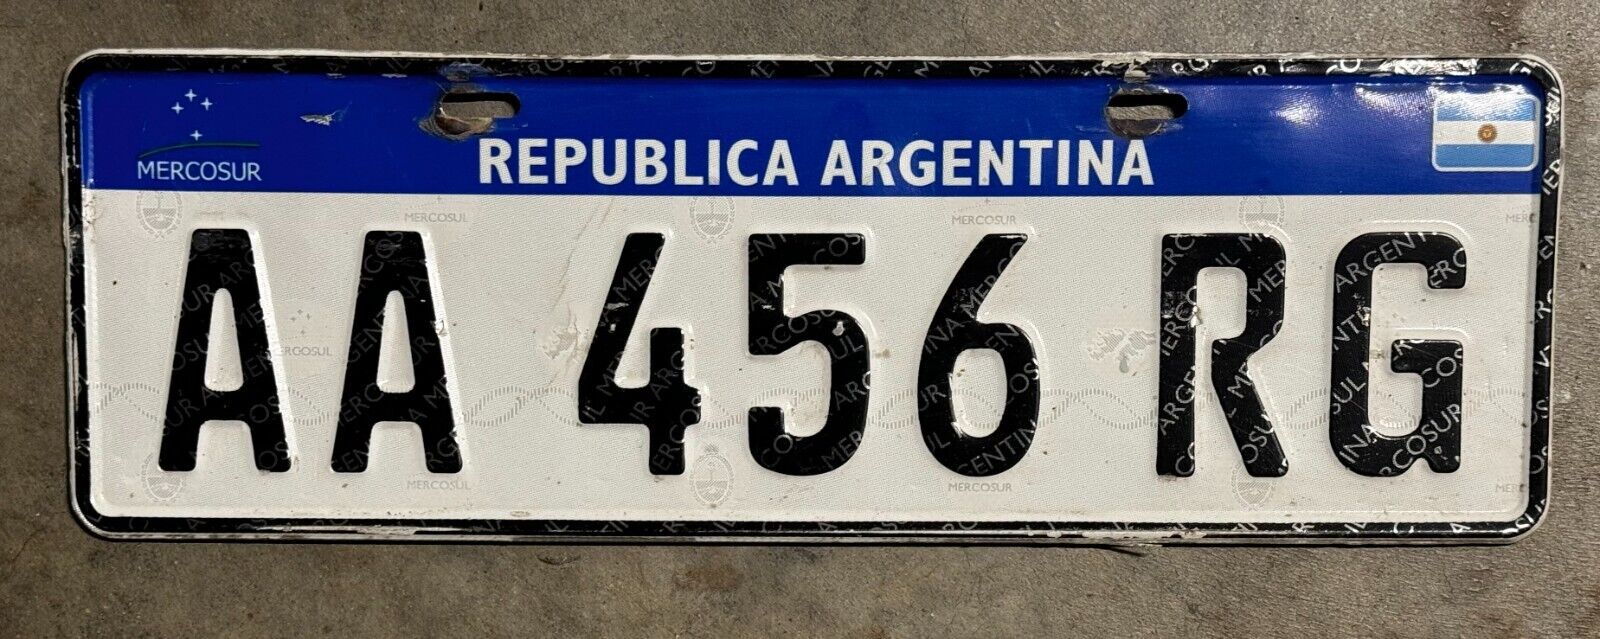 2016 Single Argentina CAR License Plate MERCOSUR - AA 456 RG